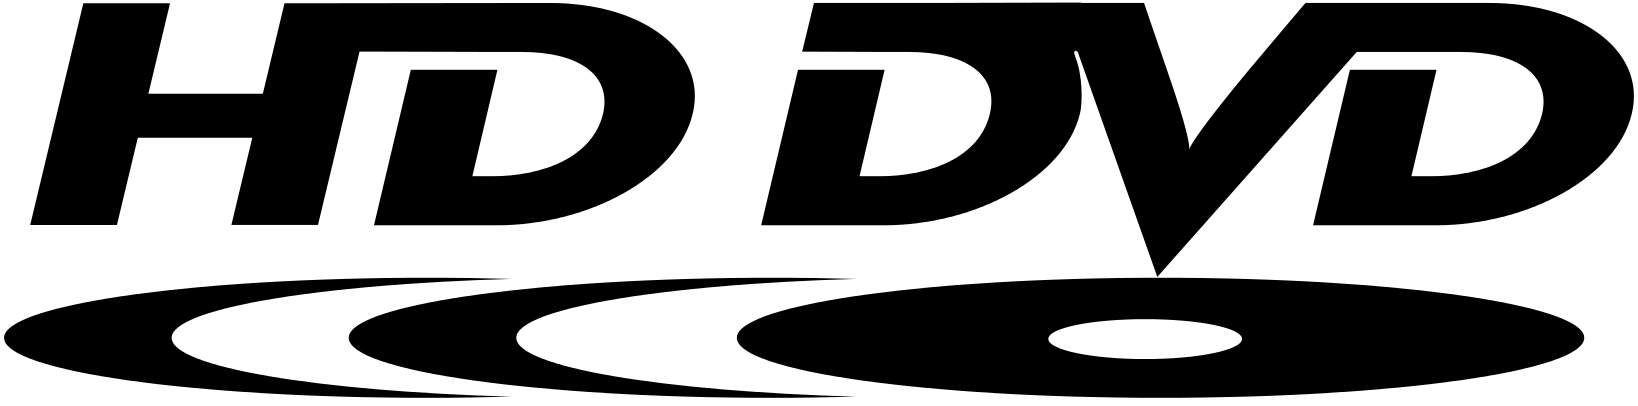 HD DVD Logo - Hd dvd logo.png